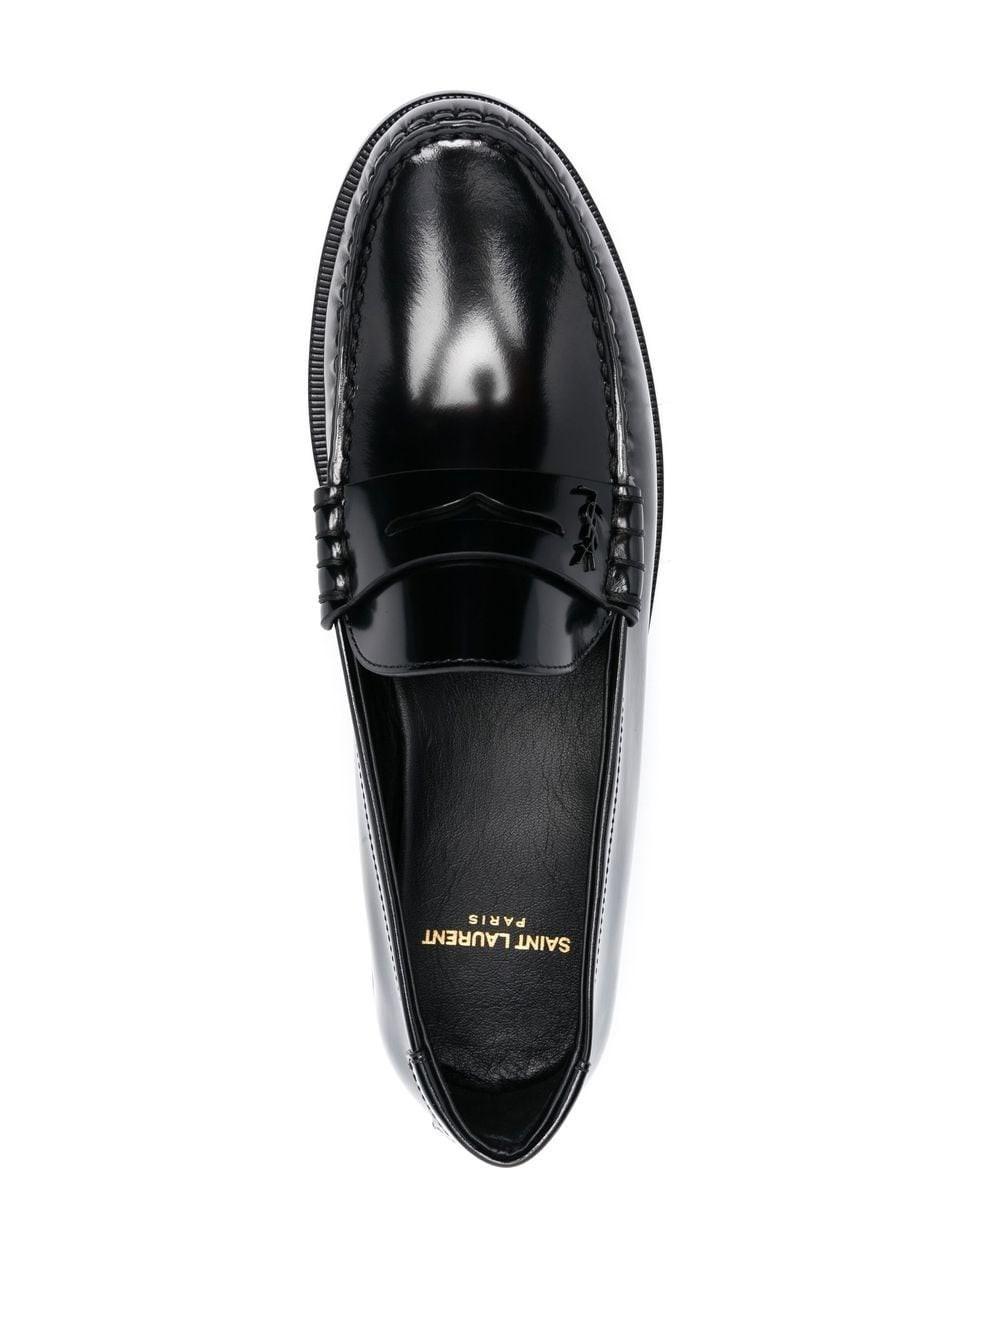 Saint Laurent Leather Penny-slot Loafers in Black for Men | Lyst